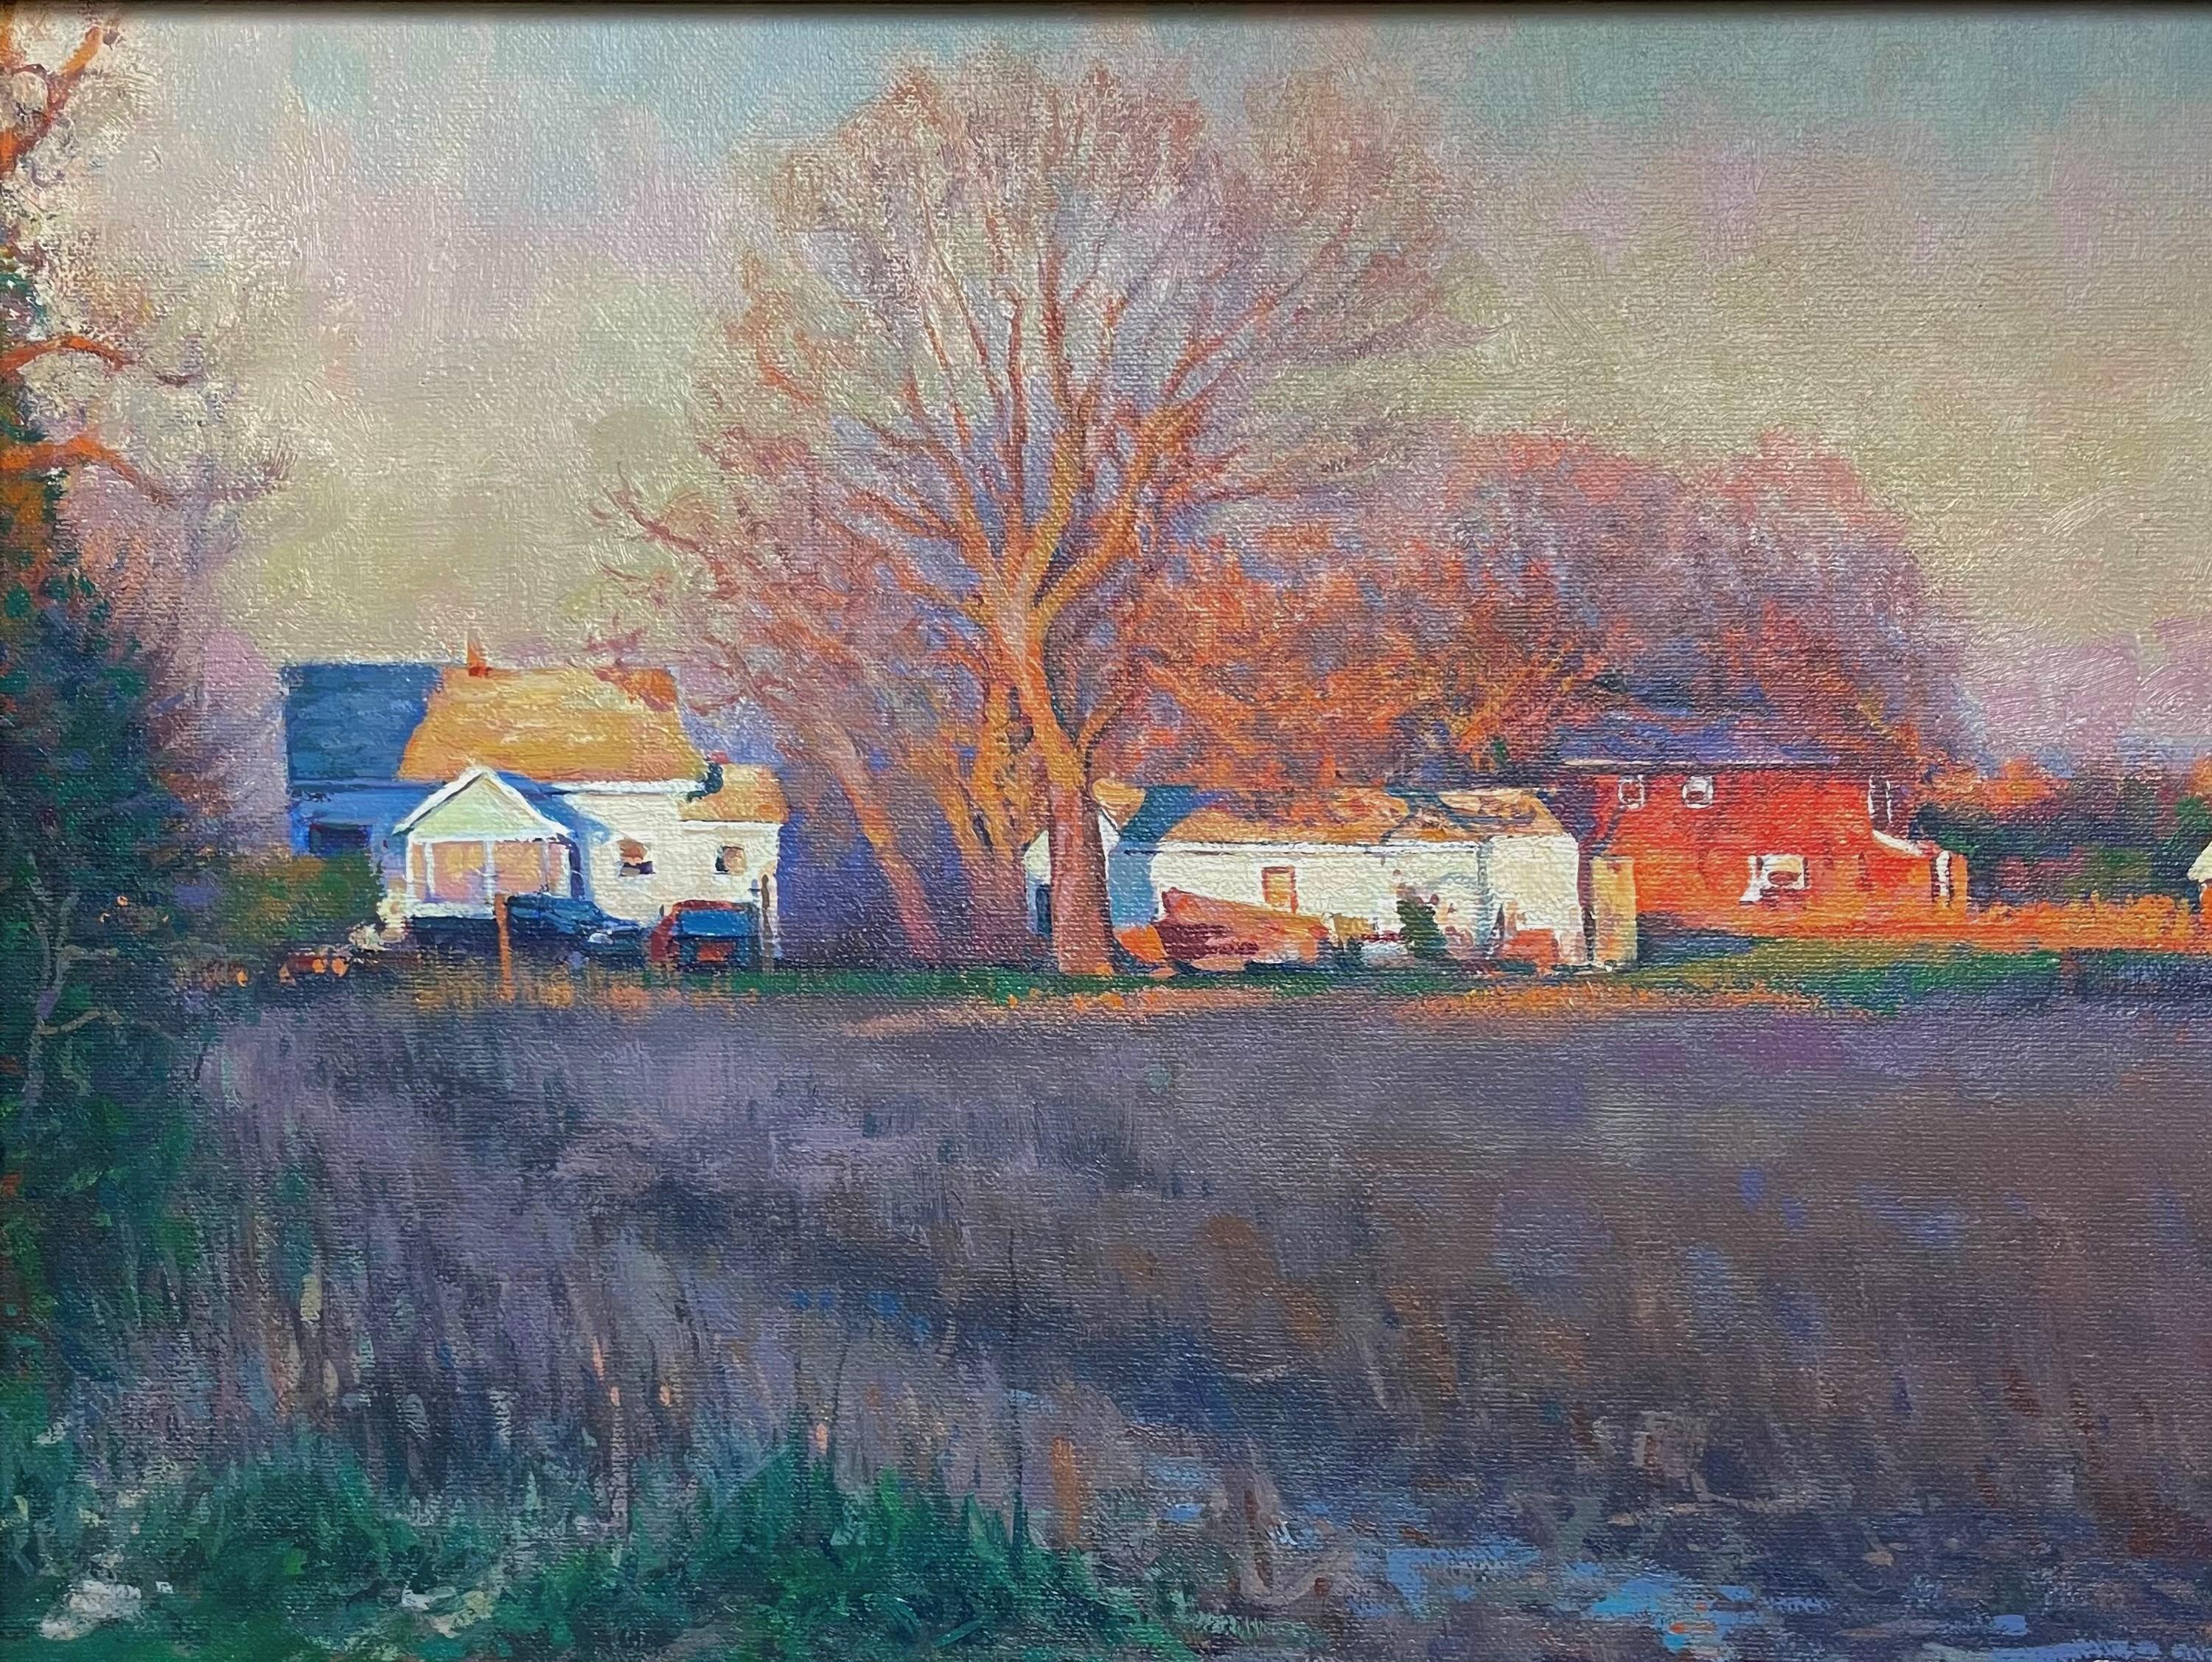  Impressionistic Rural Farm Landscape Oil Painting Michael Budden Shadow & Light For Sale 4